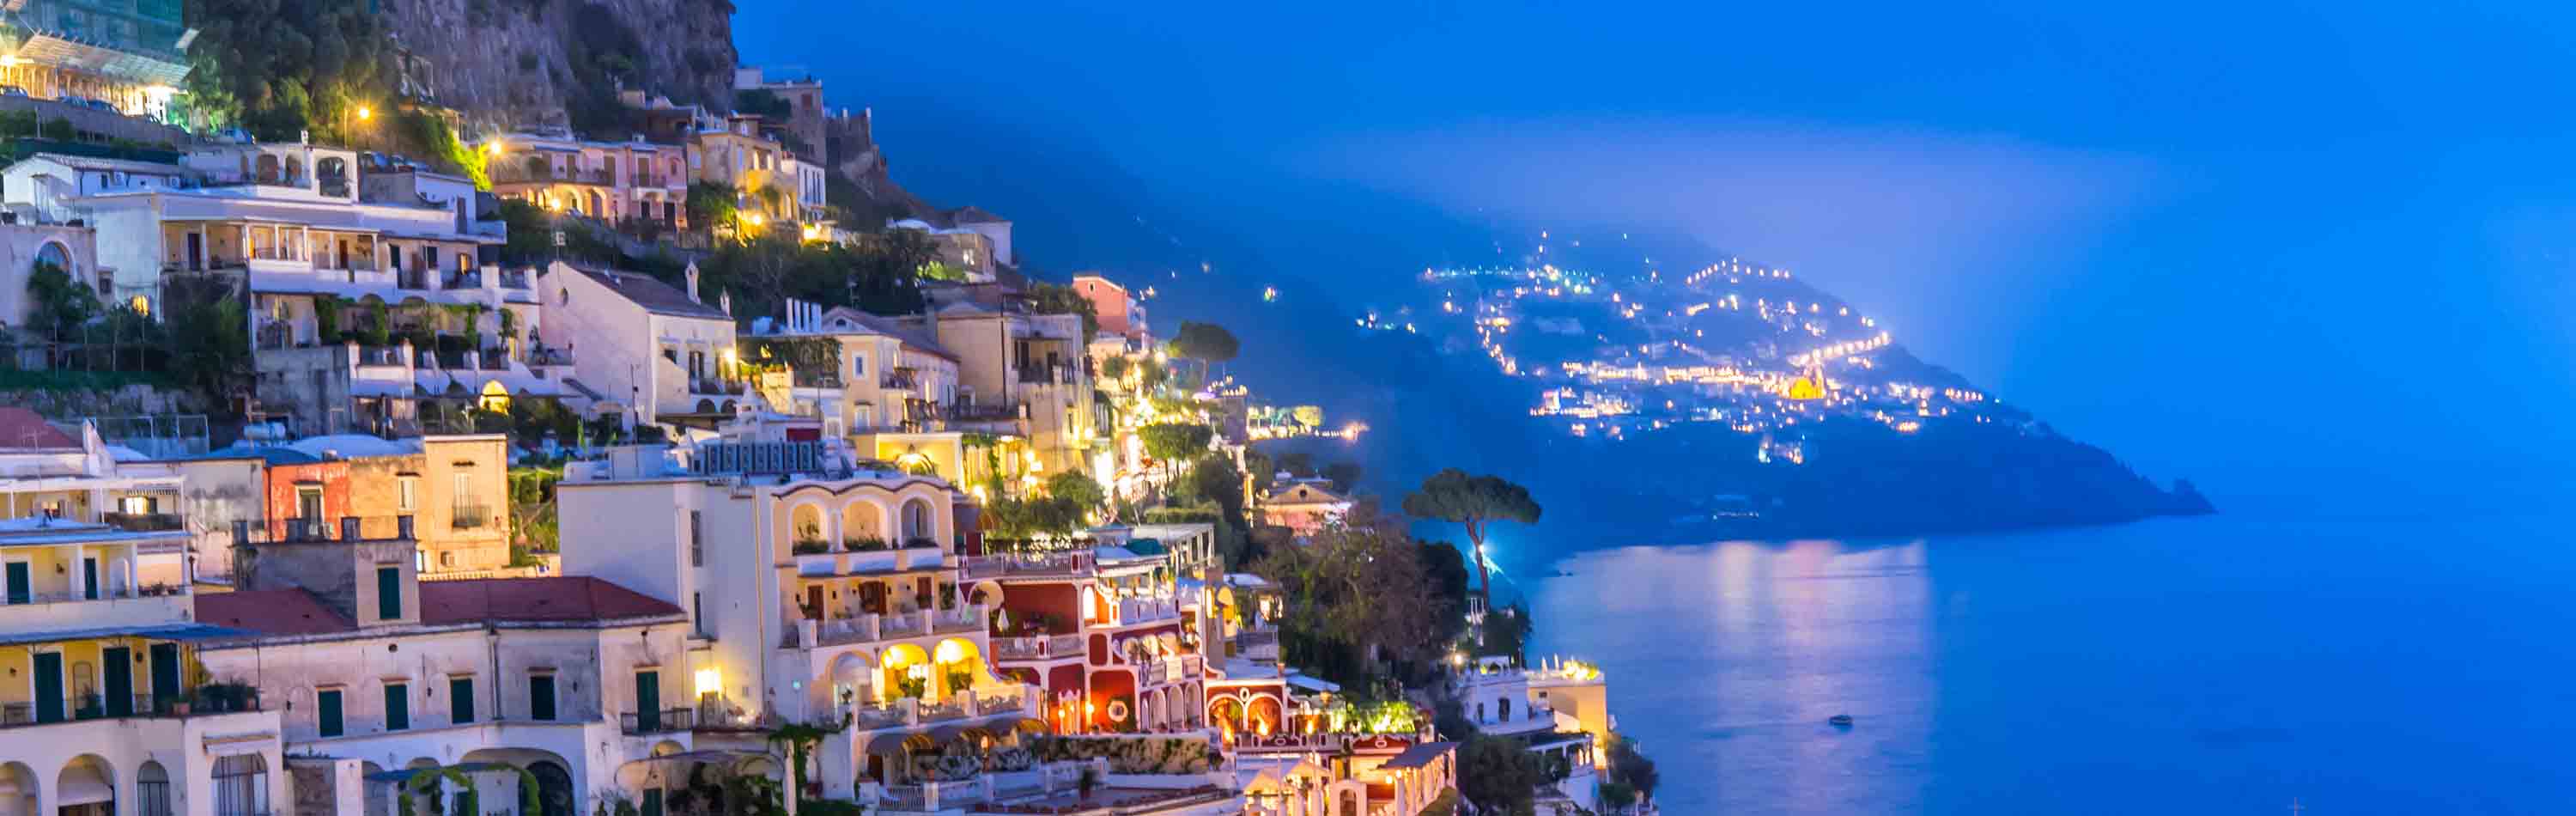 Sorrento & Amalfi Coast